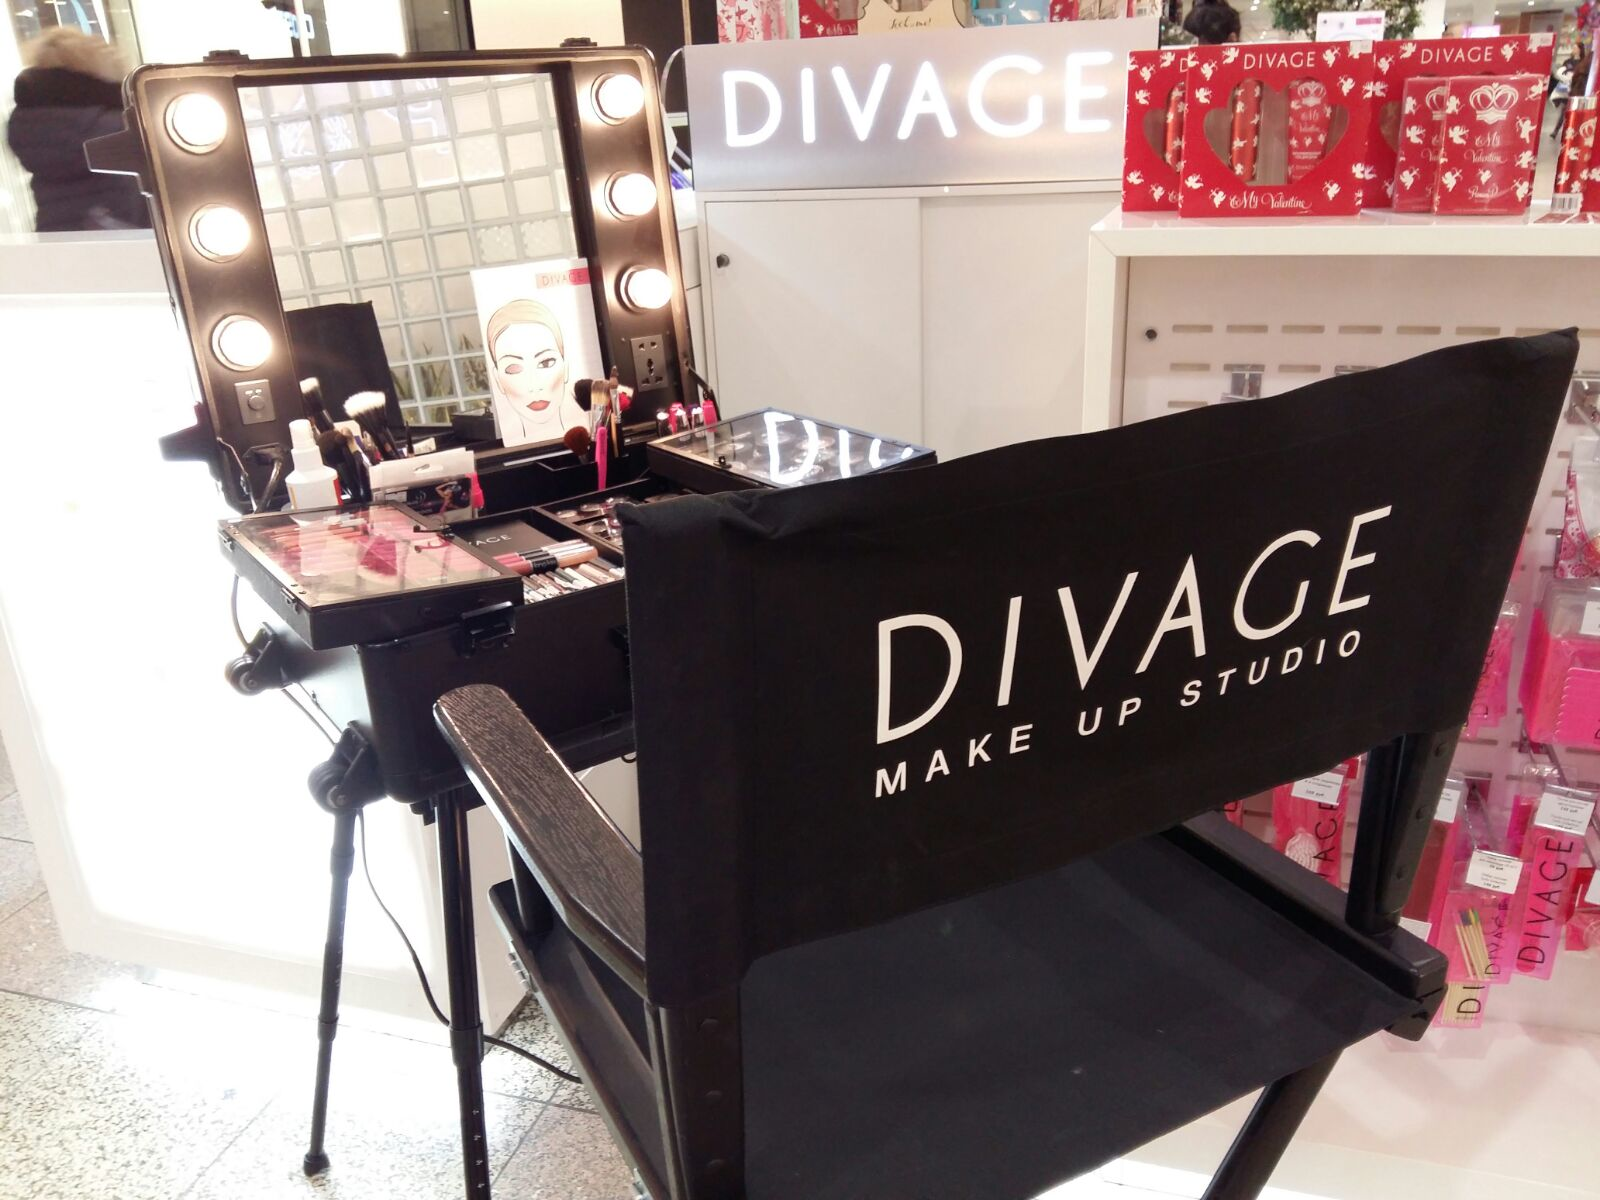  DIVAGE make up studio     !